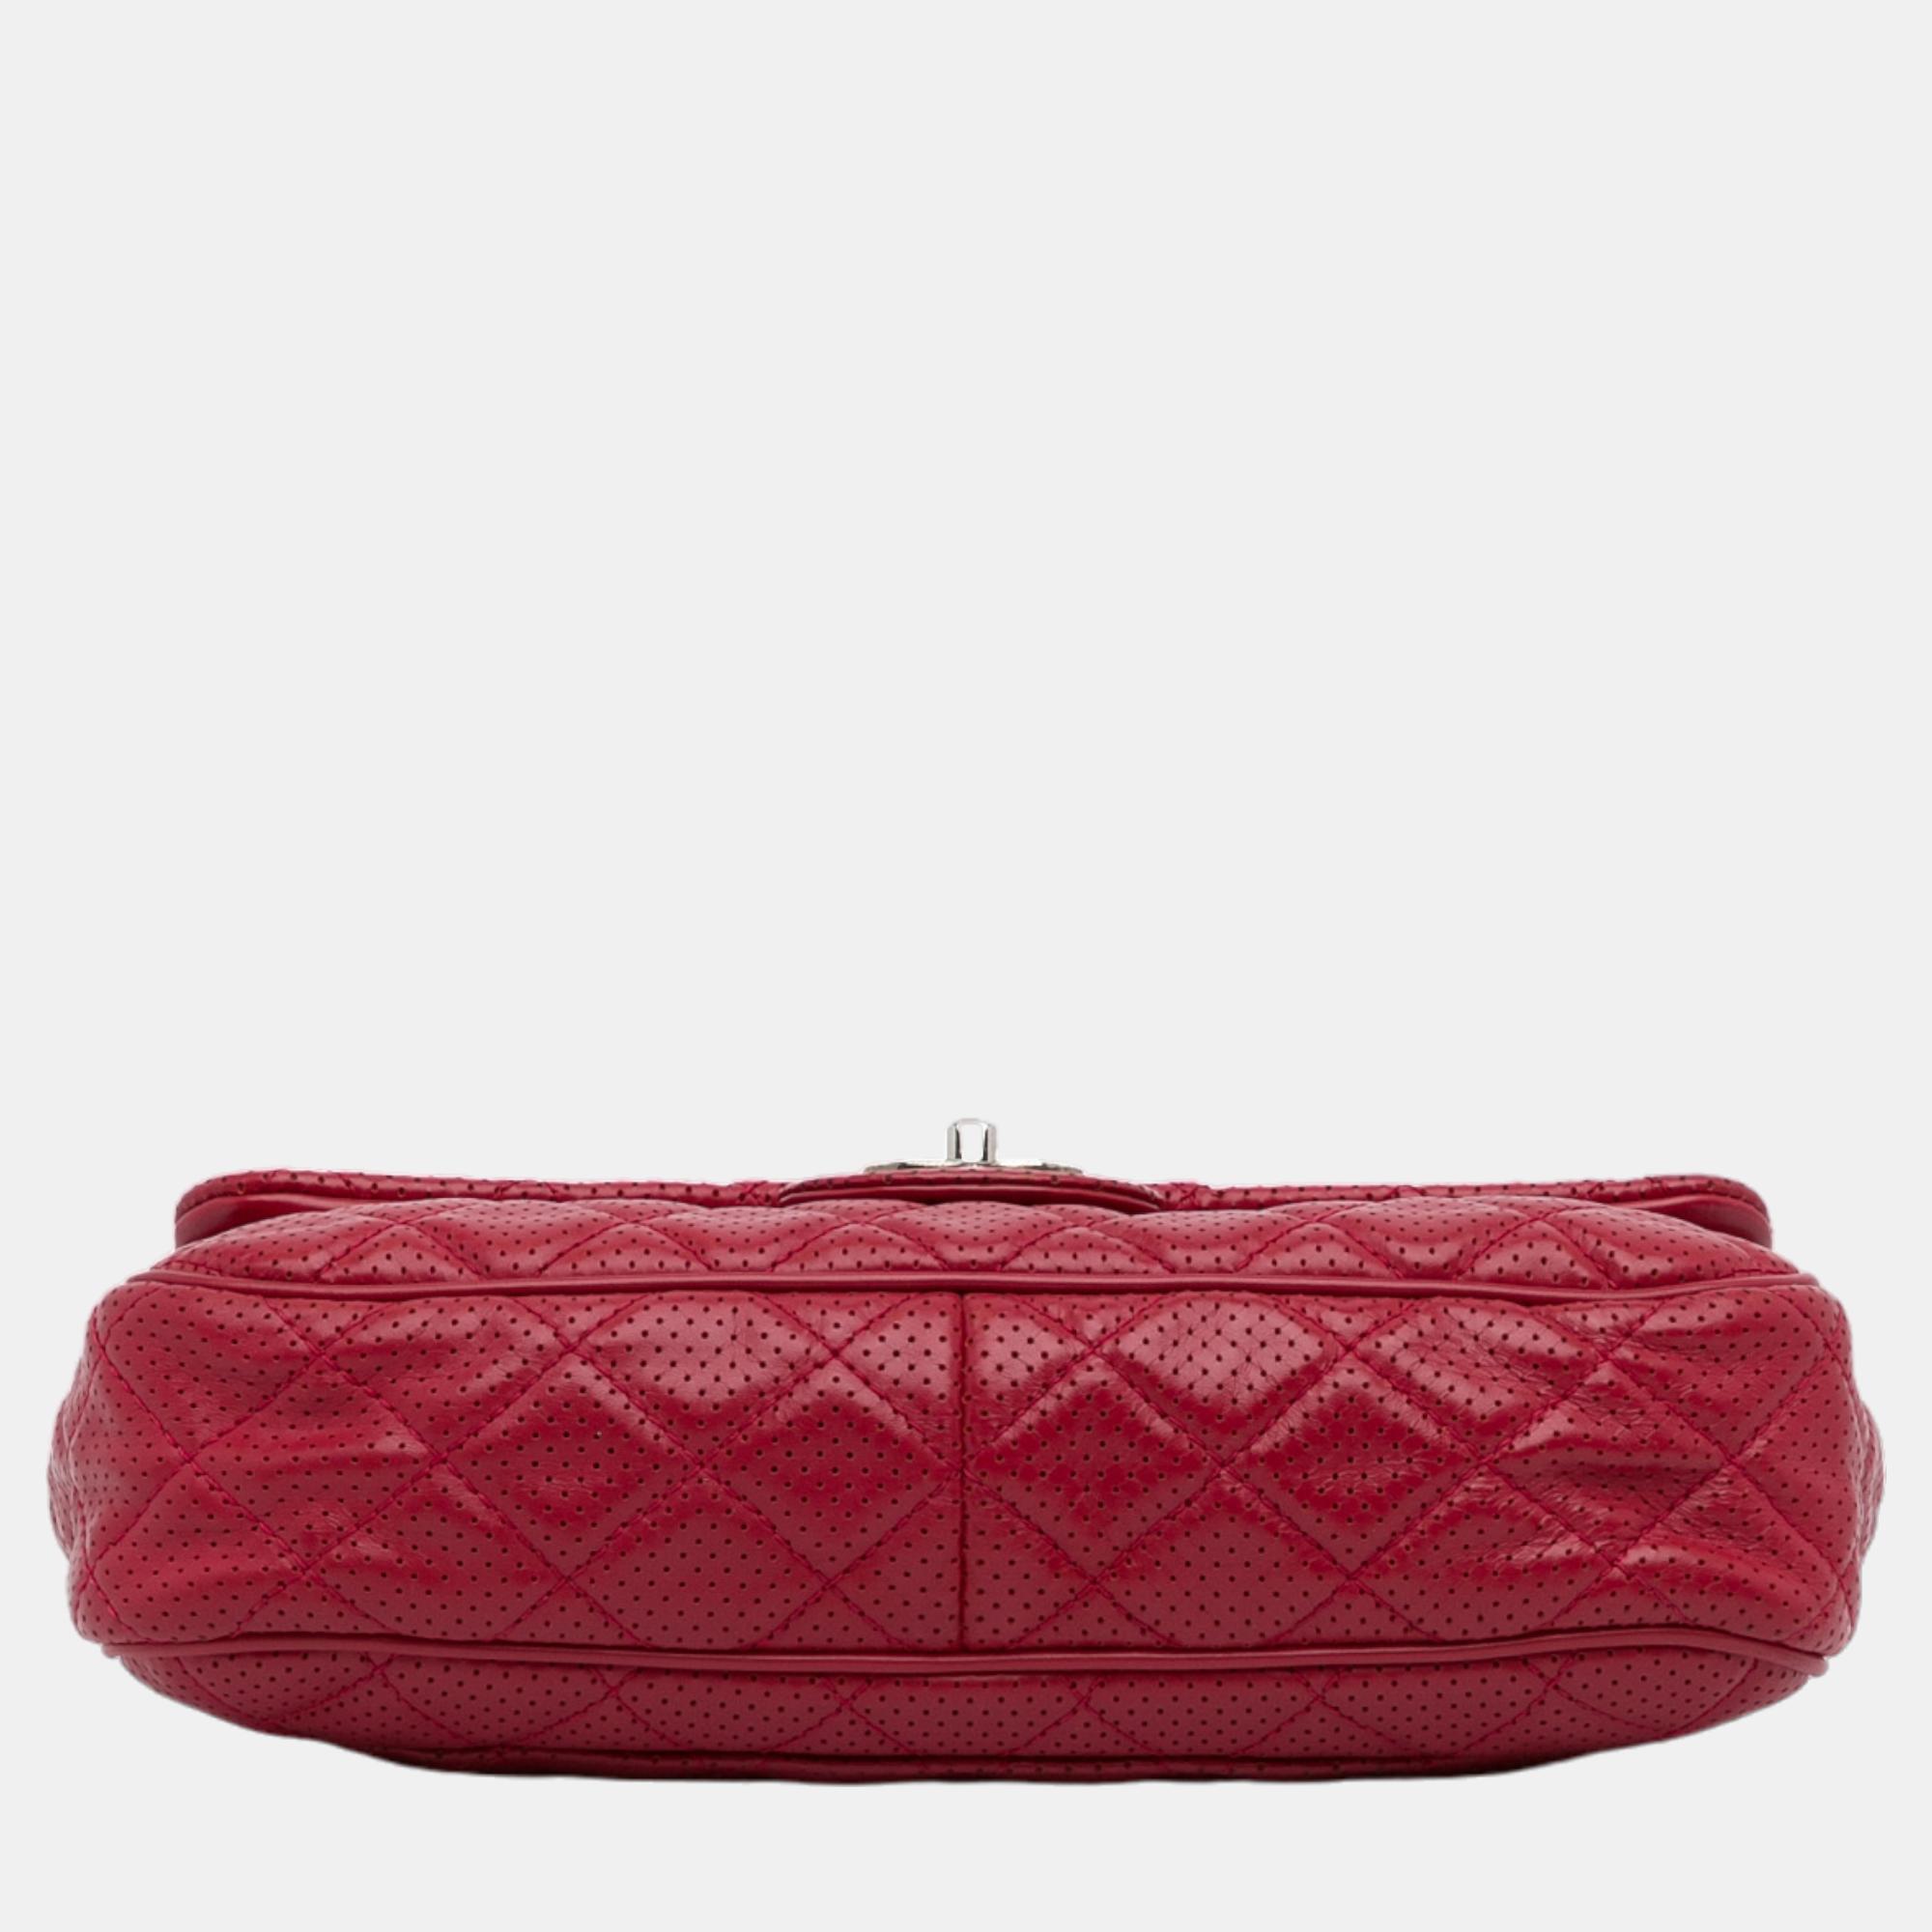 Chanel Red Jumbo Classic Perforated Lambskin Single Flap